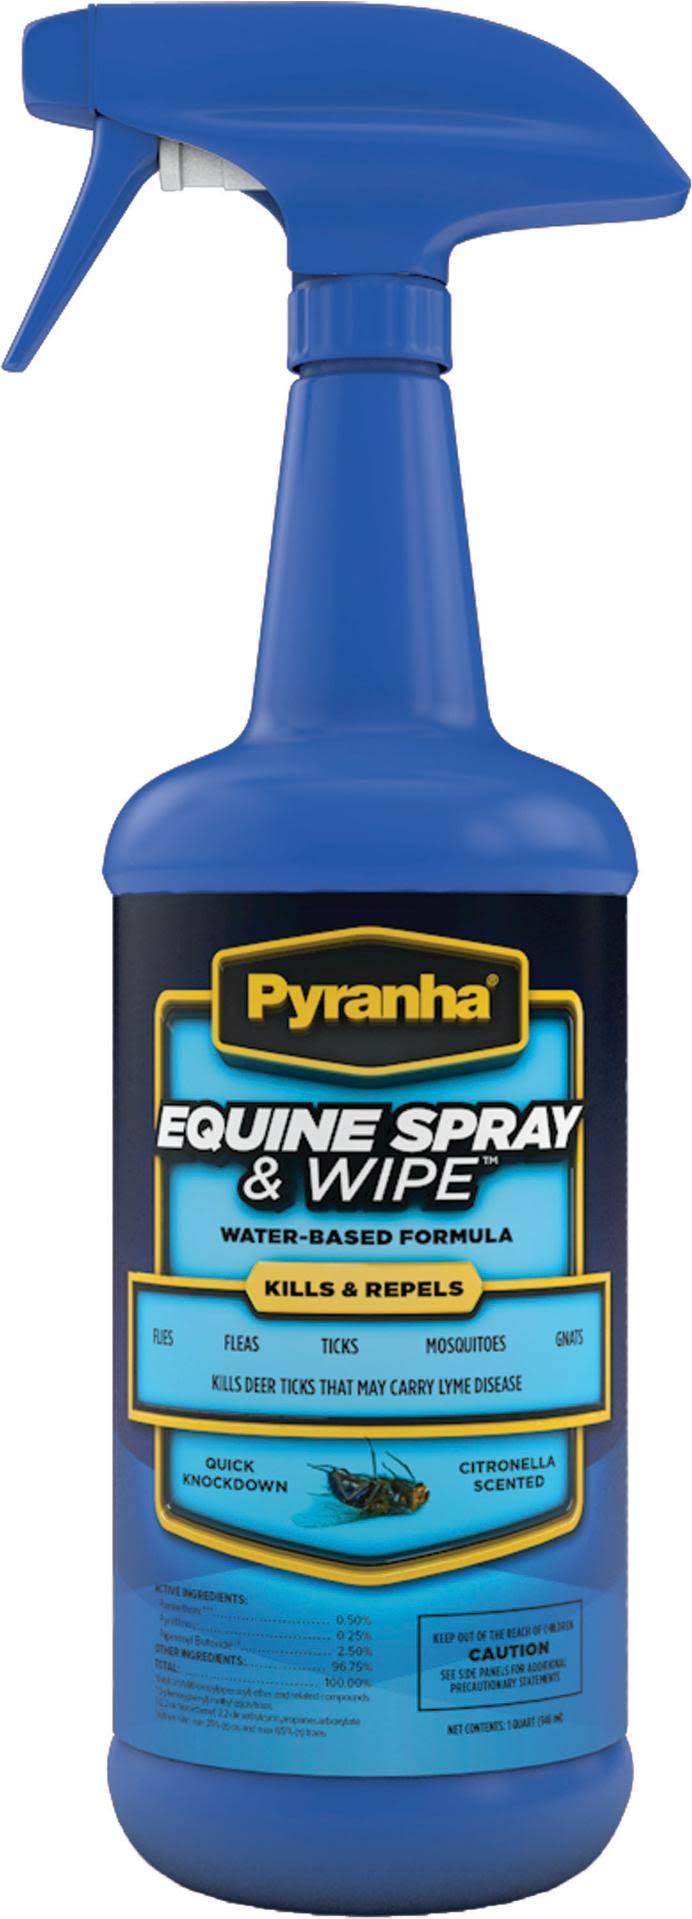 Pyranha Equire Spray & Wipe Insect Repellent